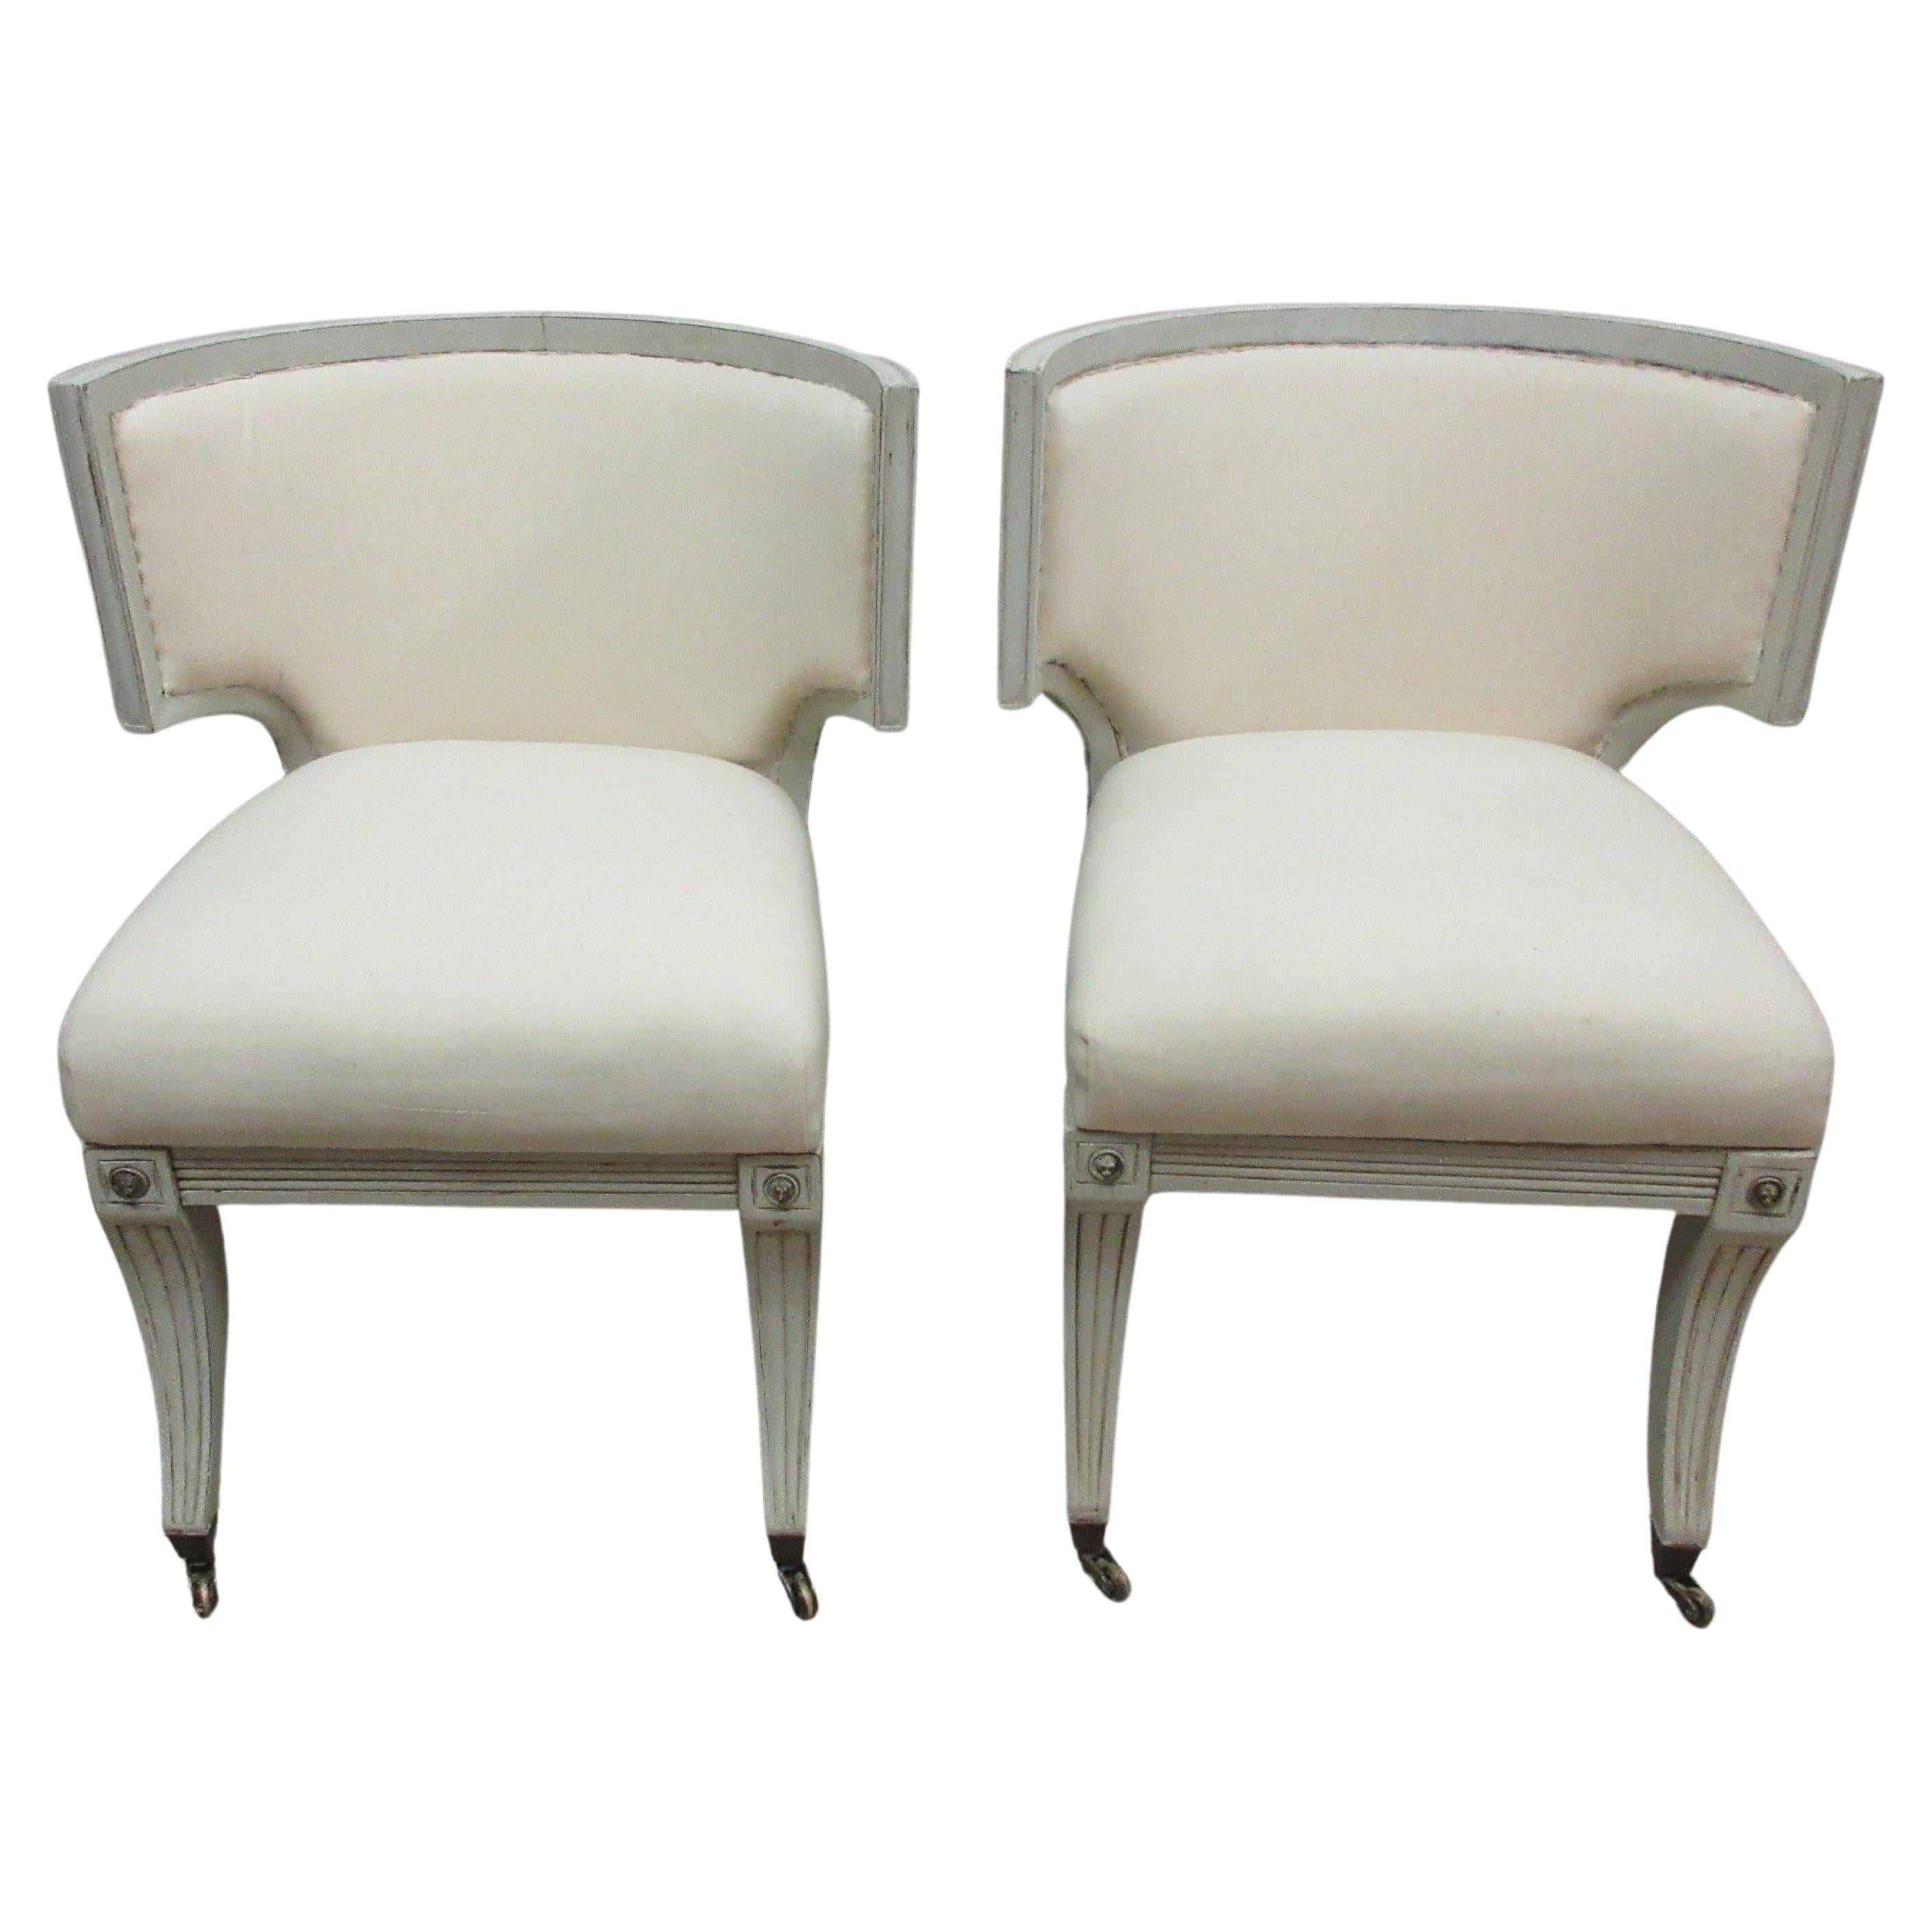 2 Swedish Klismos Style Chairs For Sale